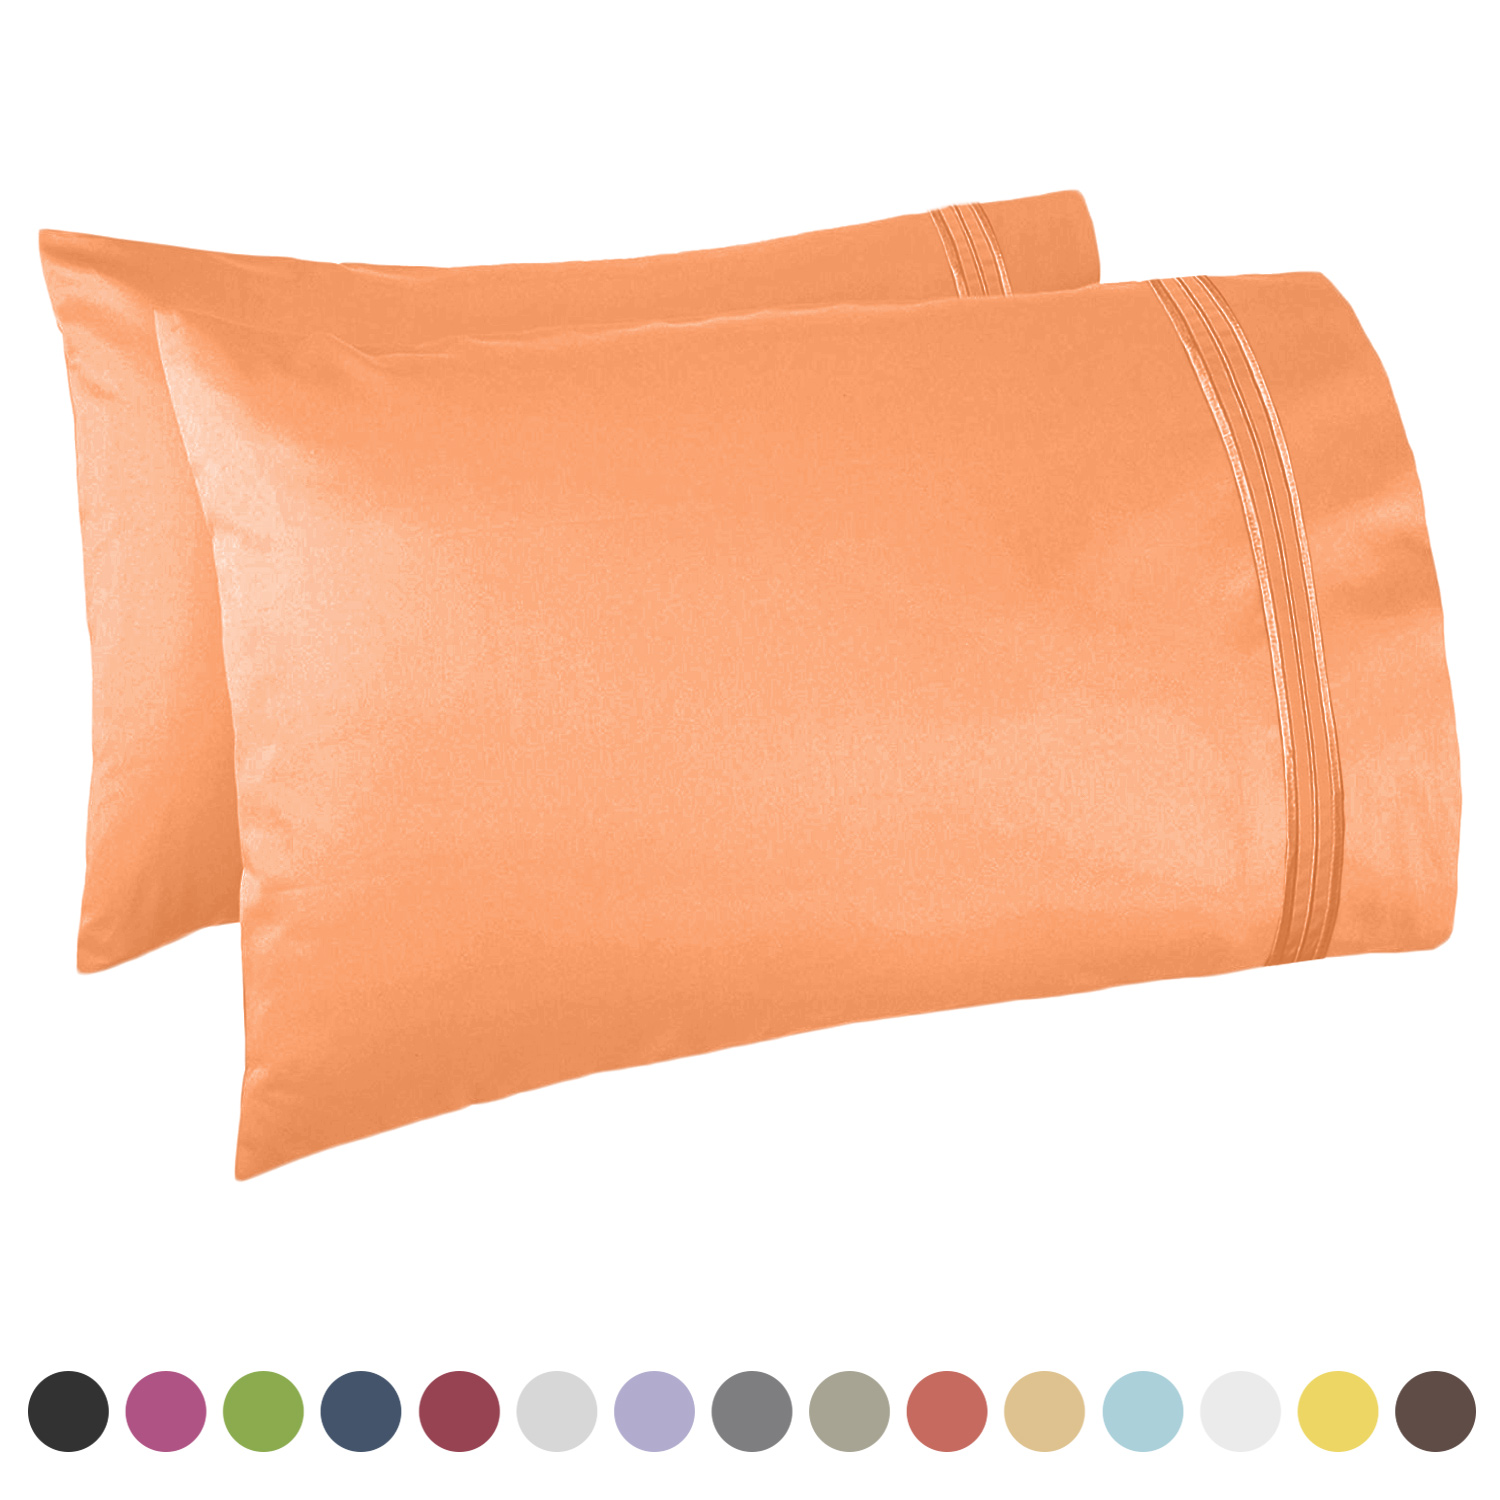 Nestl Premier 1800 Pillowcase - 100% Luxury Soft Microfiber Pillow Case Sleep Covers - Hypoallergenic Sleeping Encasements - Queen Standard Size (20"x30"), Apricot Buff Orange, Set of 2 Pieces